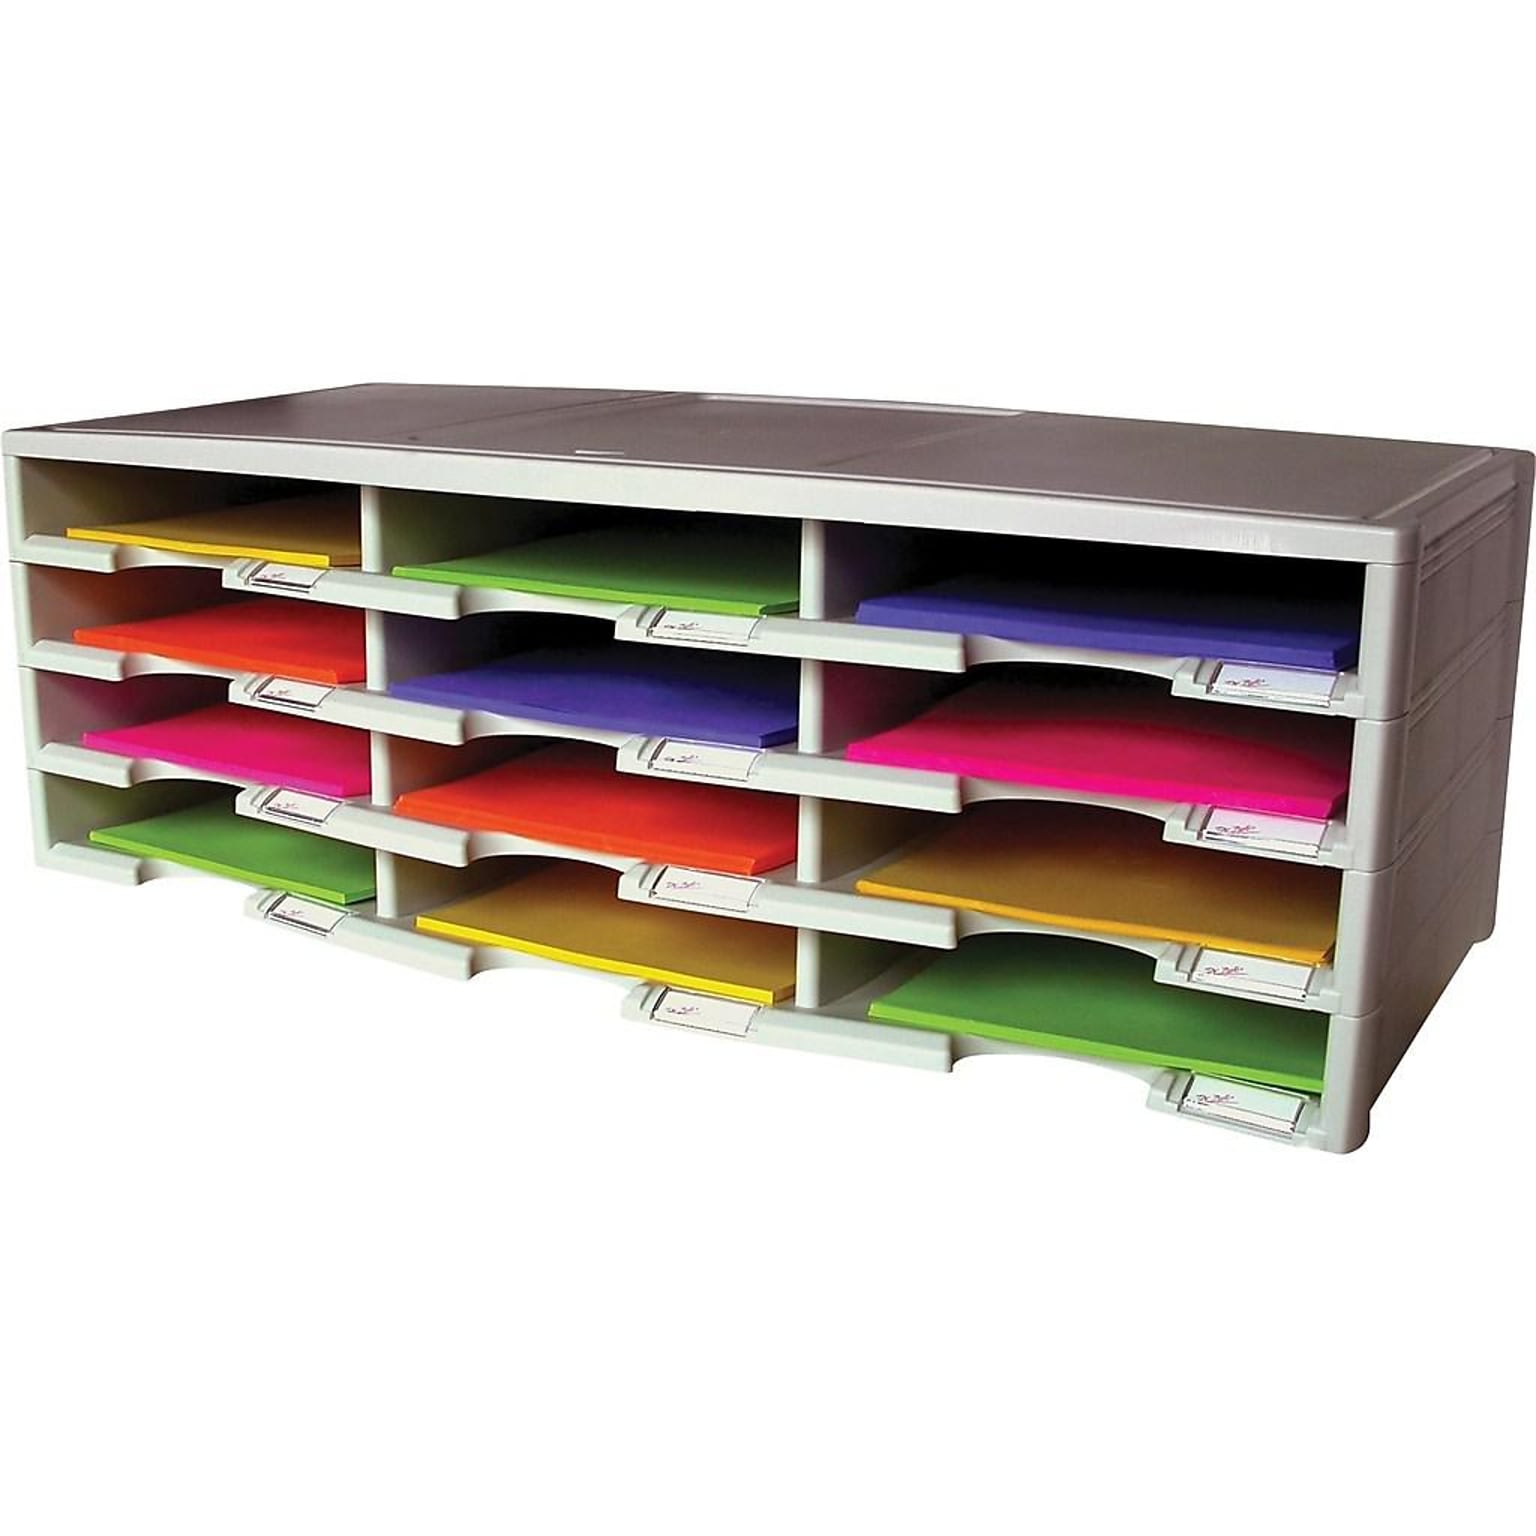 Storex 12-Compartment Literature Organizers, 32 x 10.5, Gray (61601U01C)